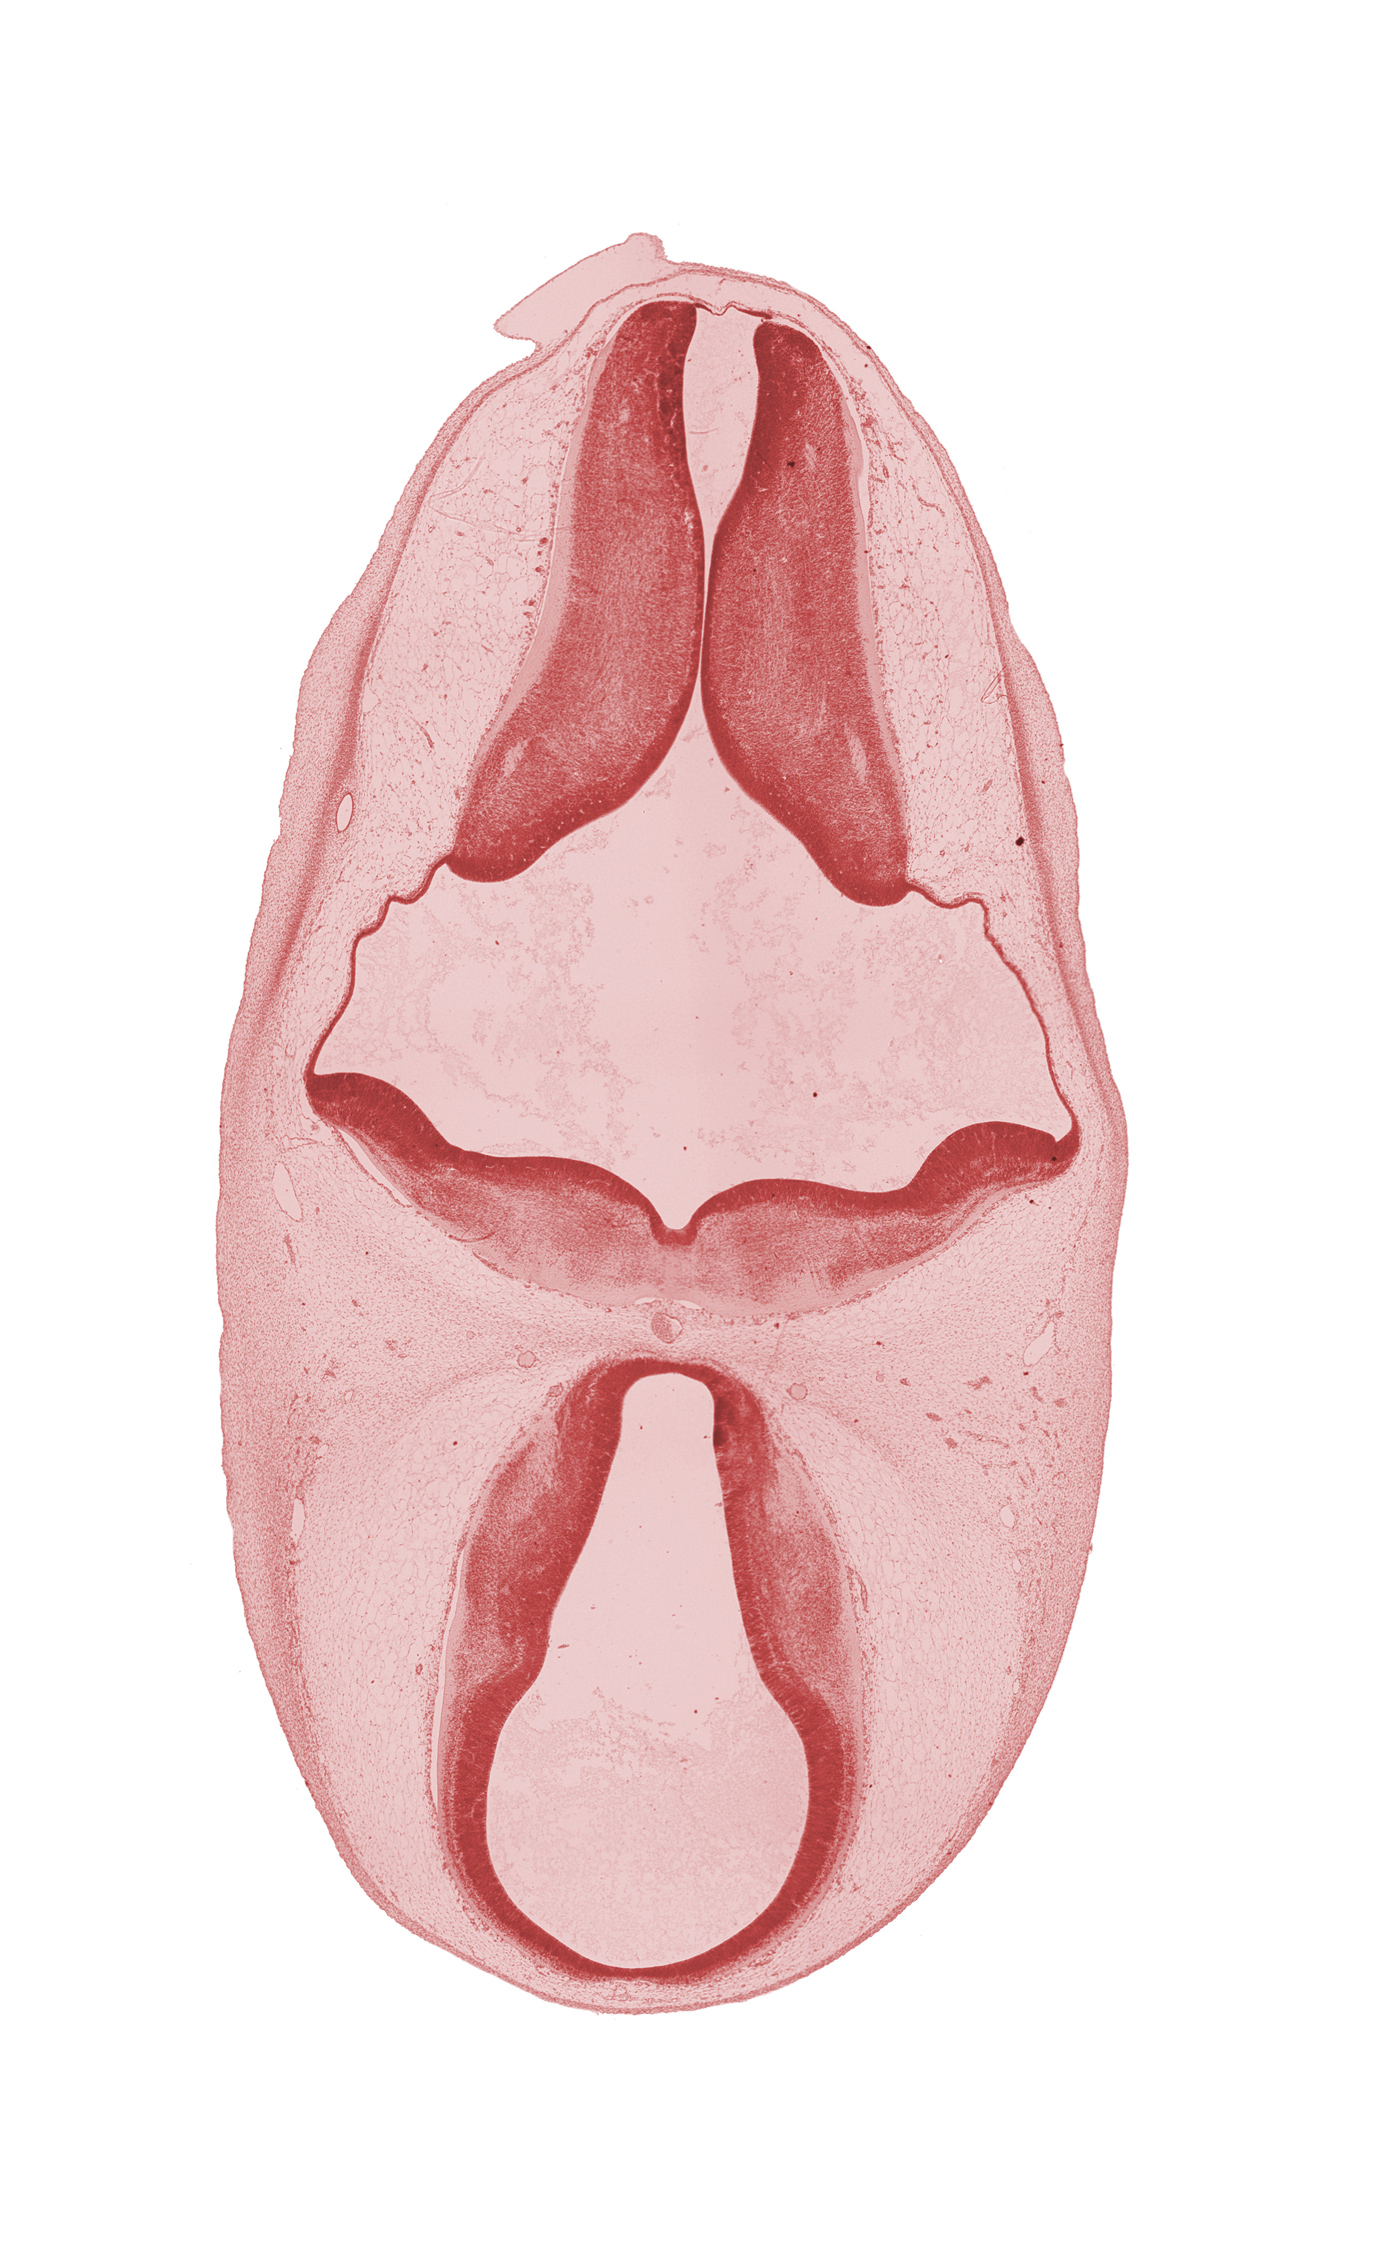 basilar artery, diencephalon, metencephalon, rhombencoel (fourth ventricle), sulcus terminalis, third ventricle